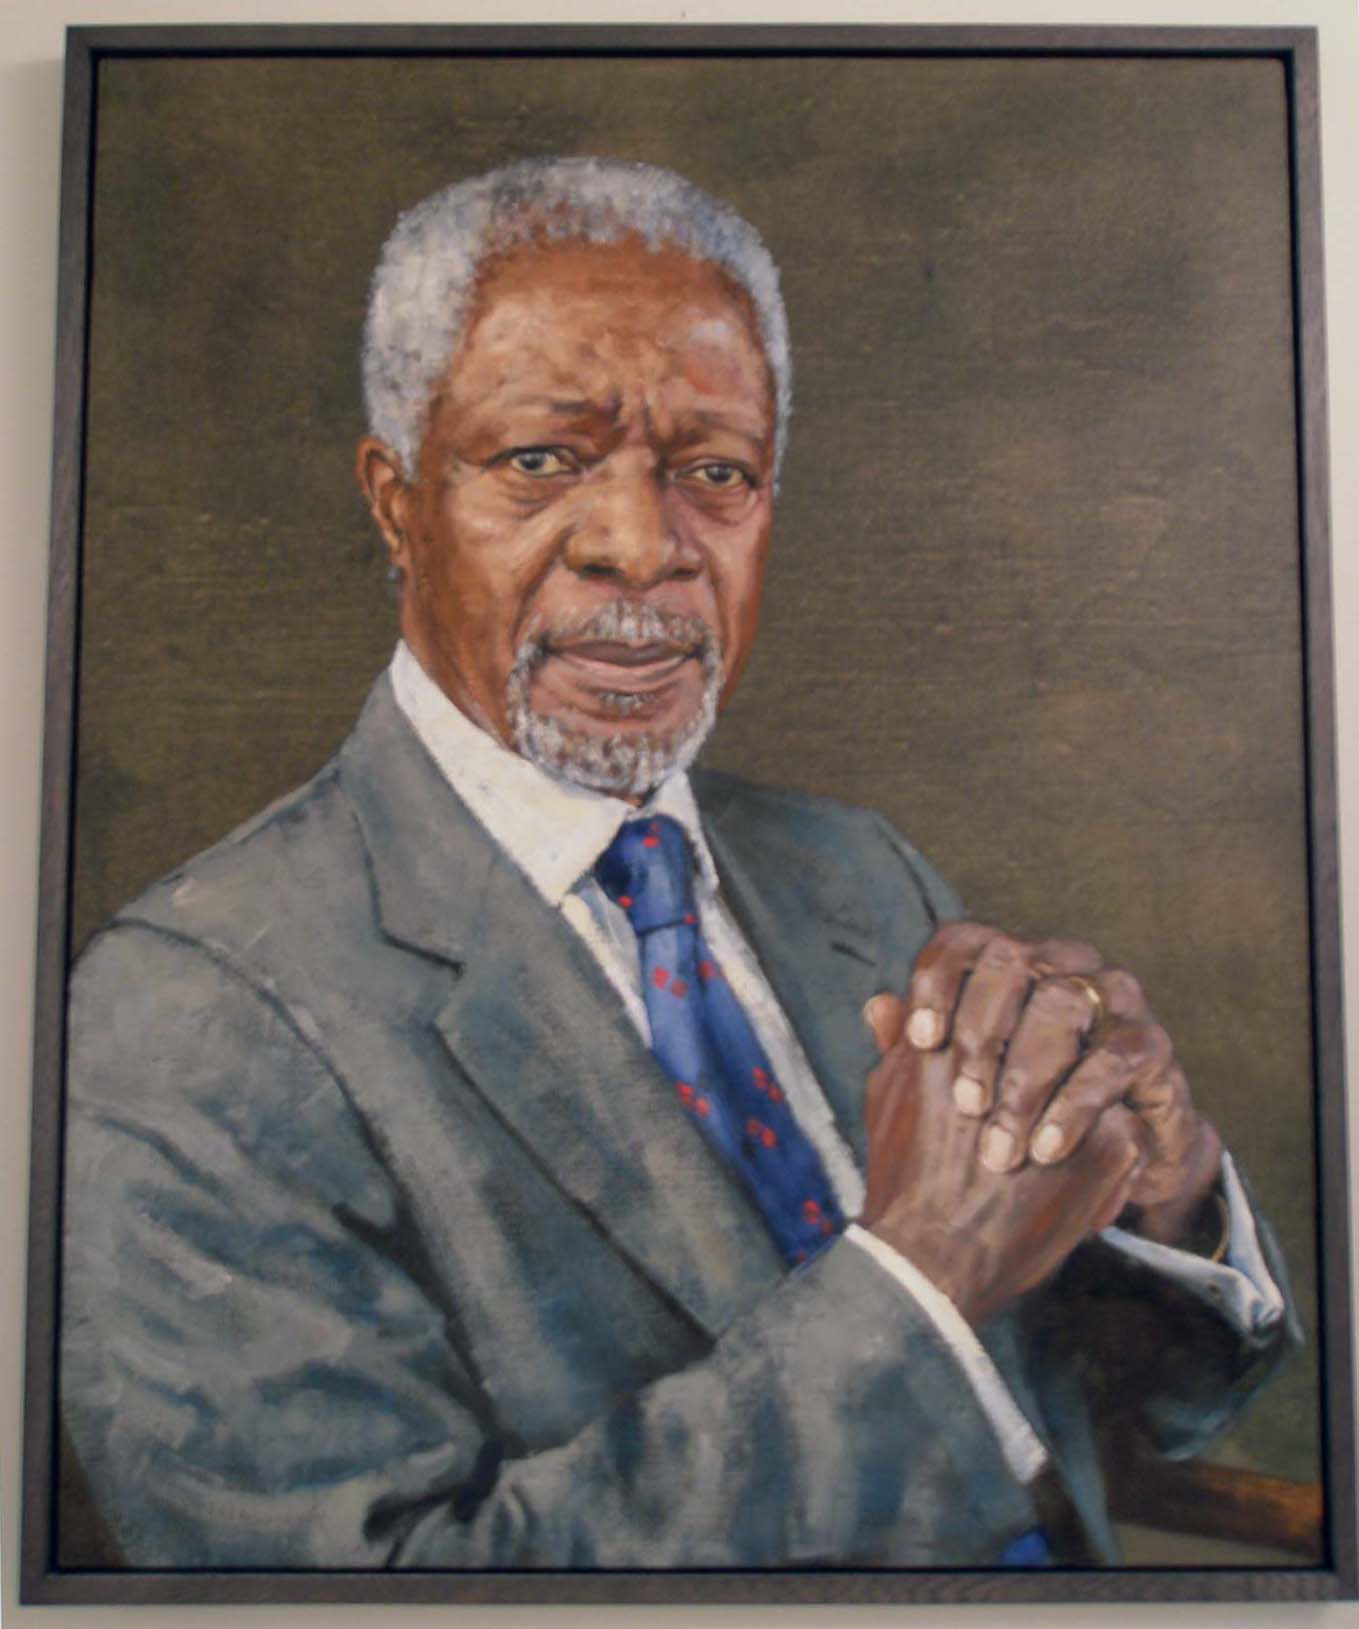 Retrato de Kofi Annan, UNNY311G, 2010, Kofi Annan